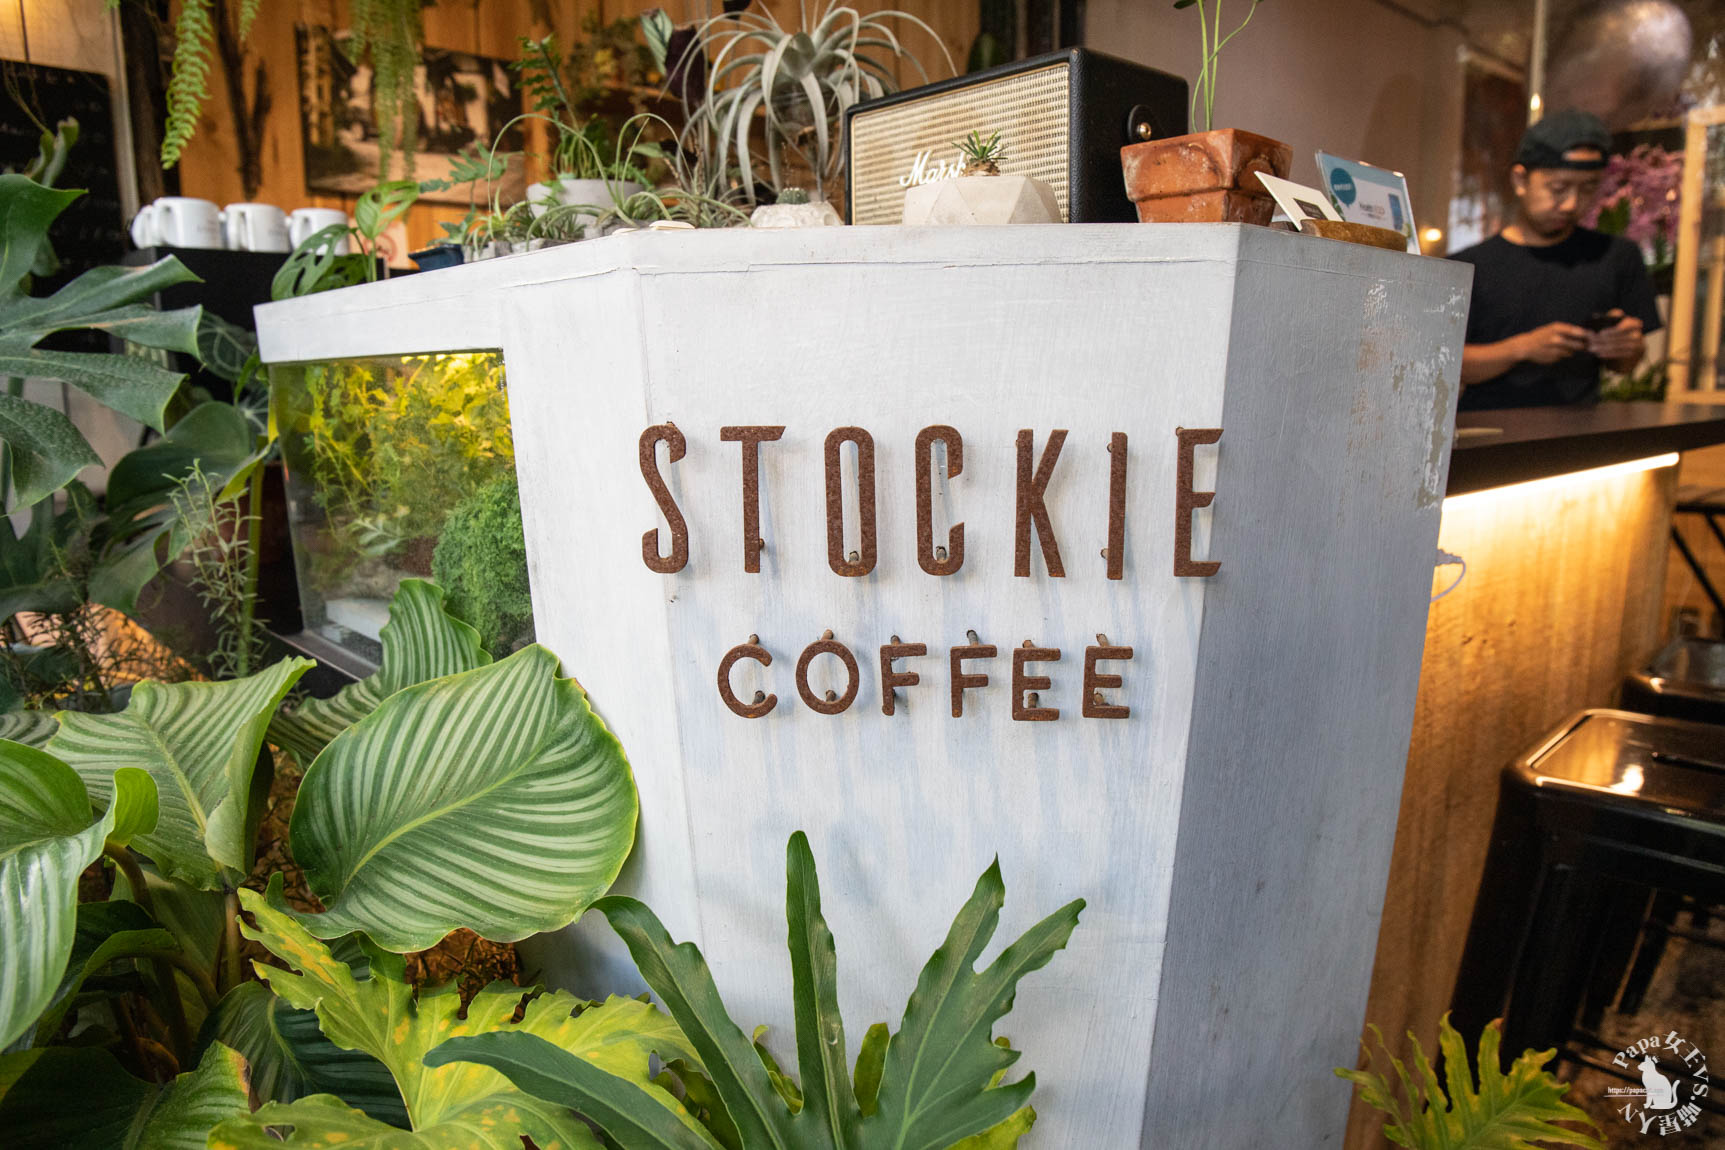 STOCKIE Coffee